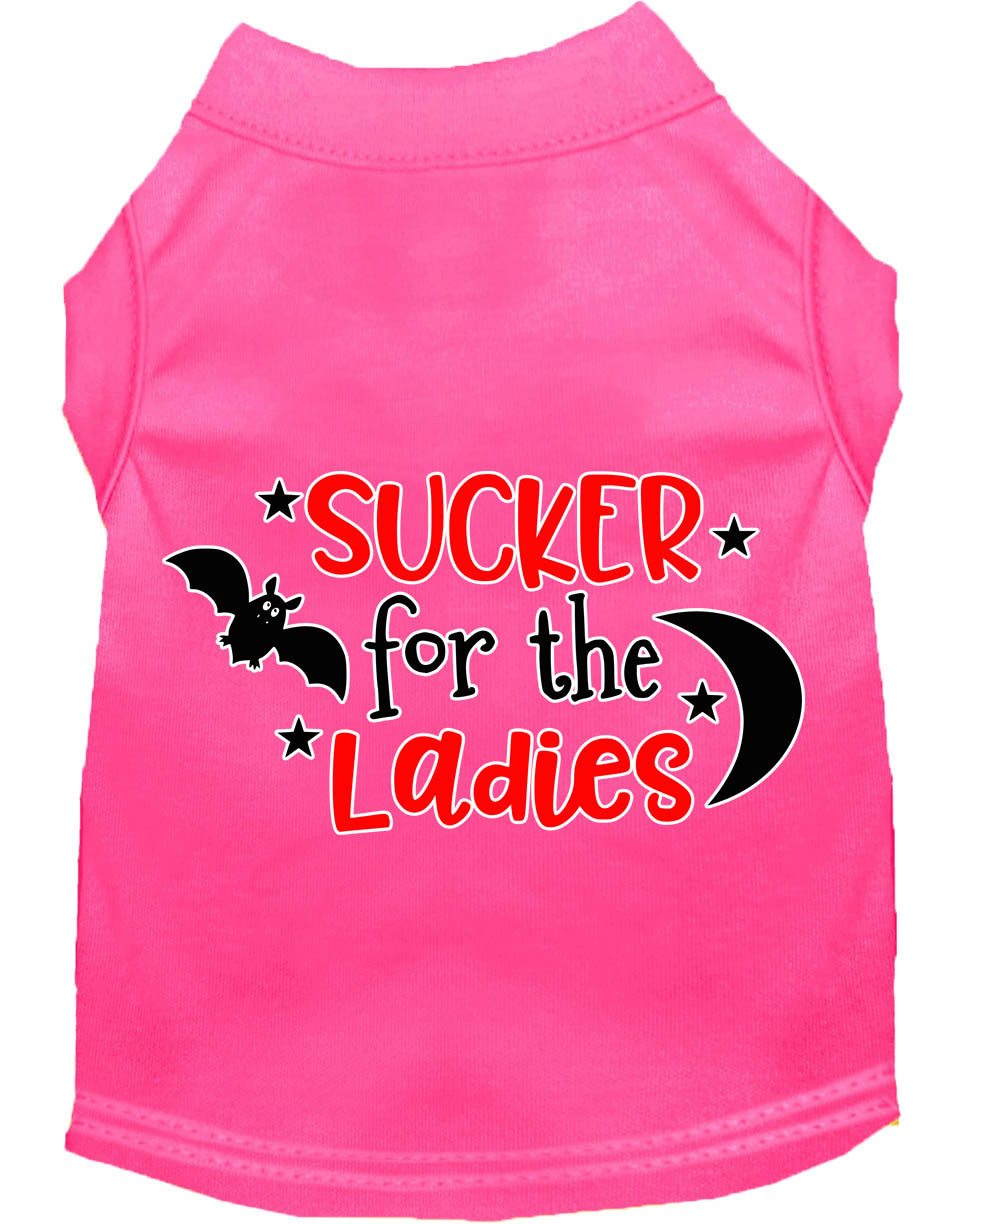 Sucker for the Ladies Screen Print Dog Shirt Bright Pink XXXL